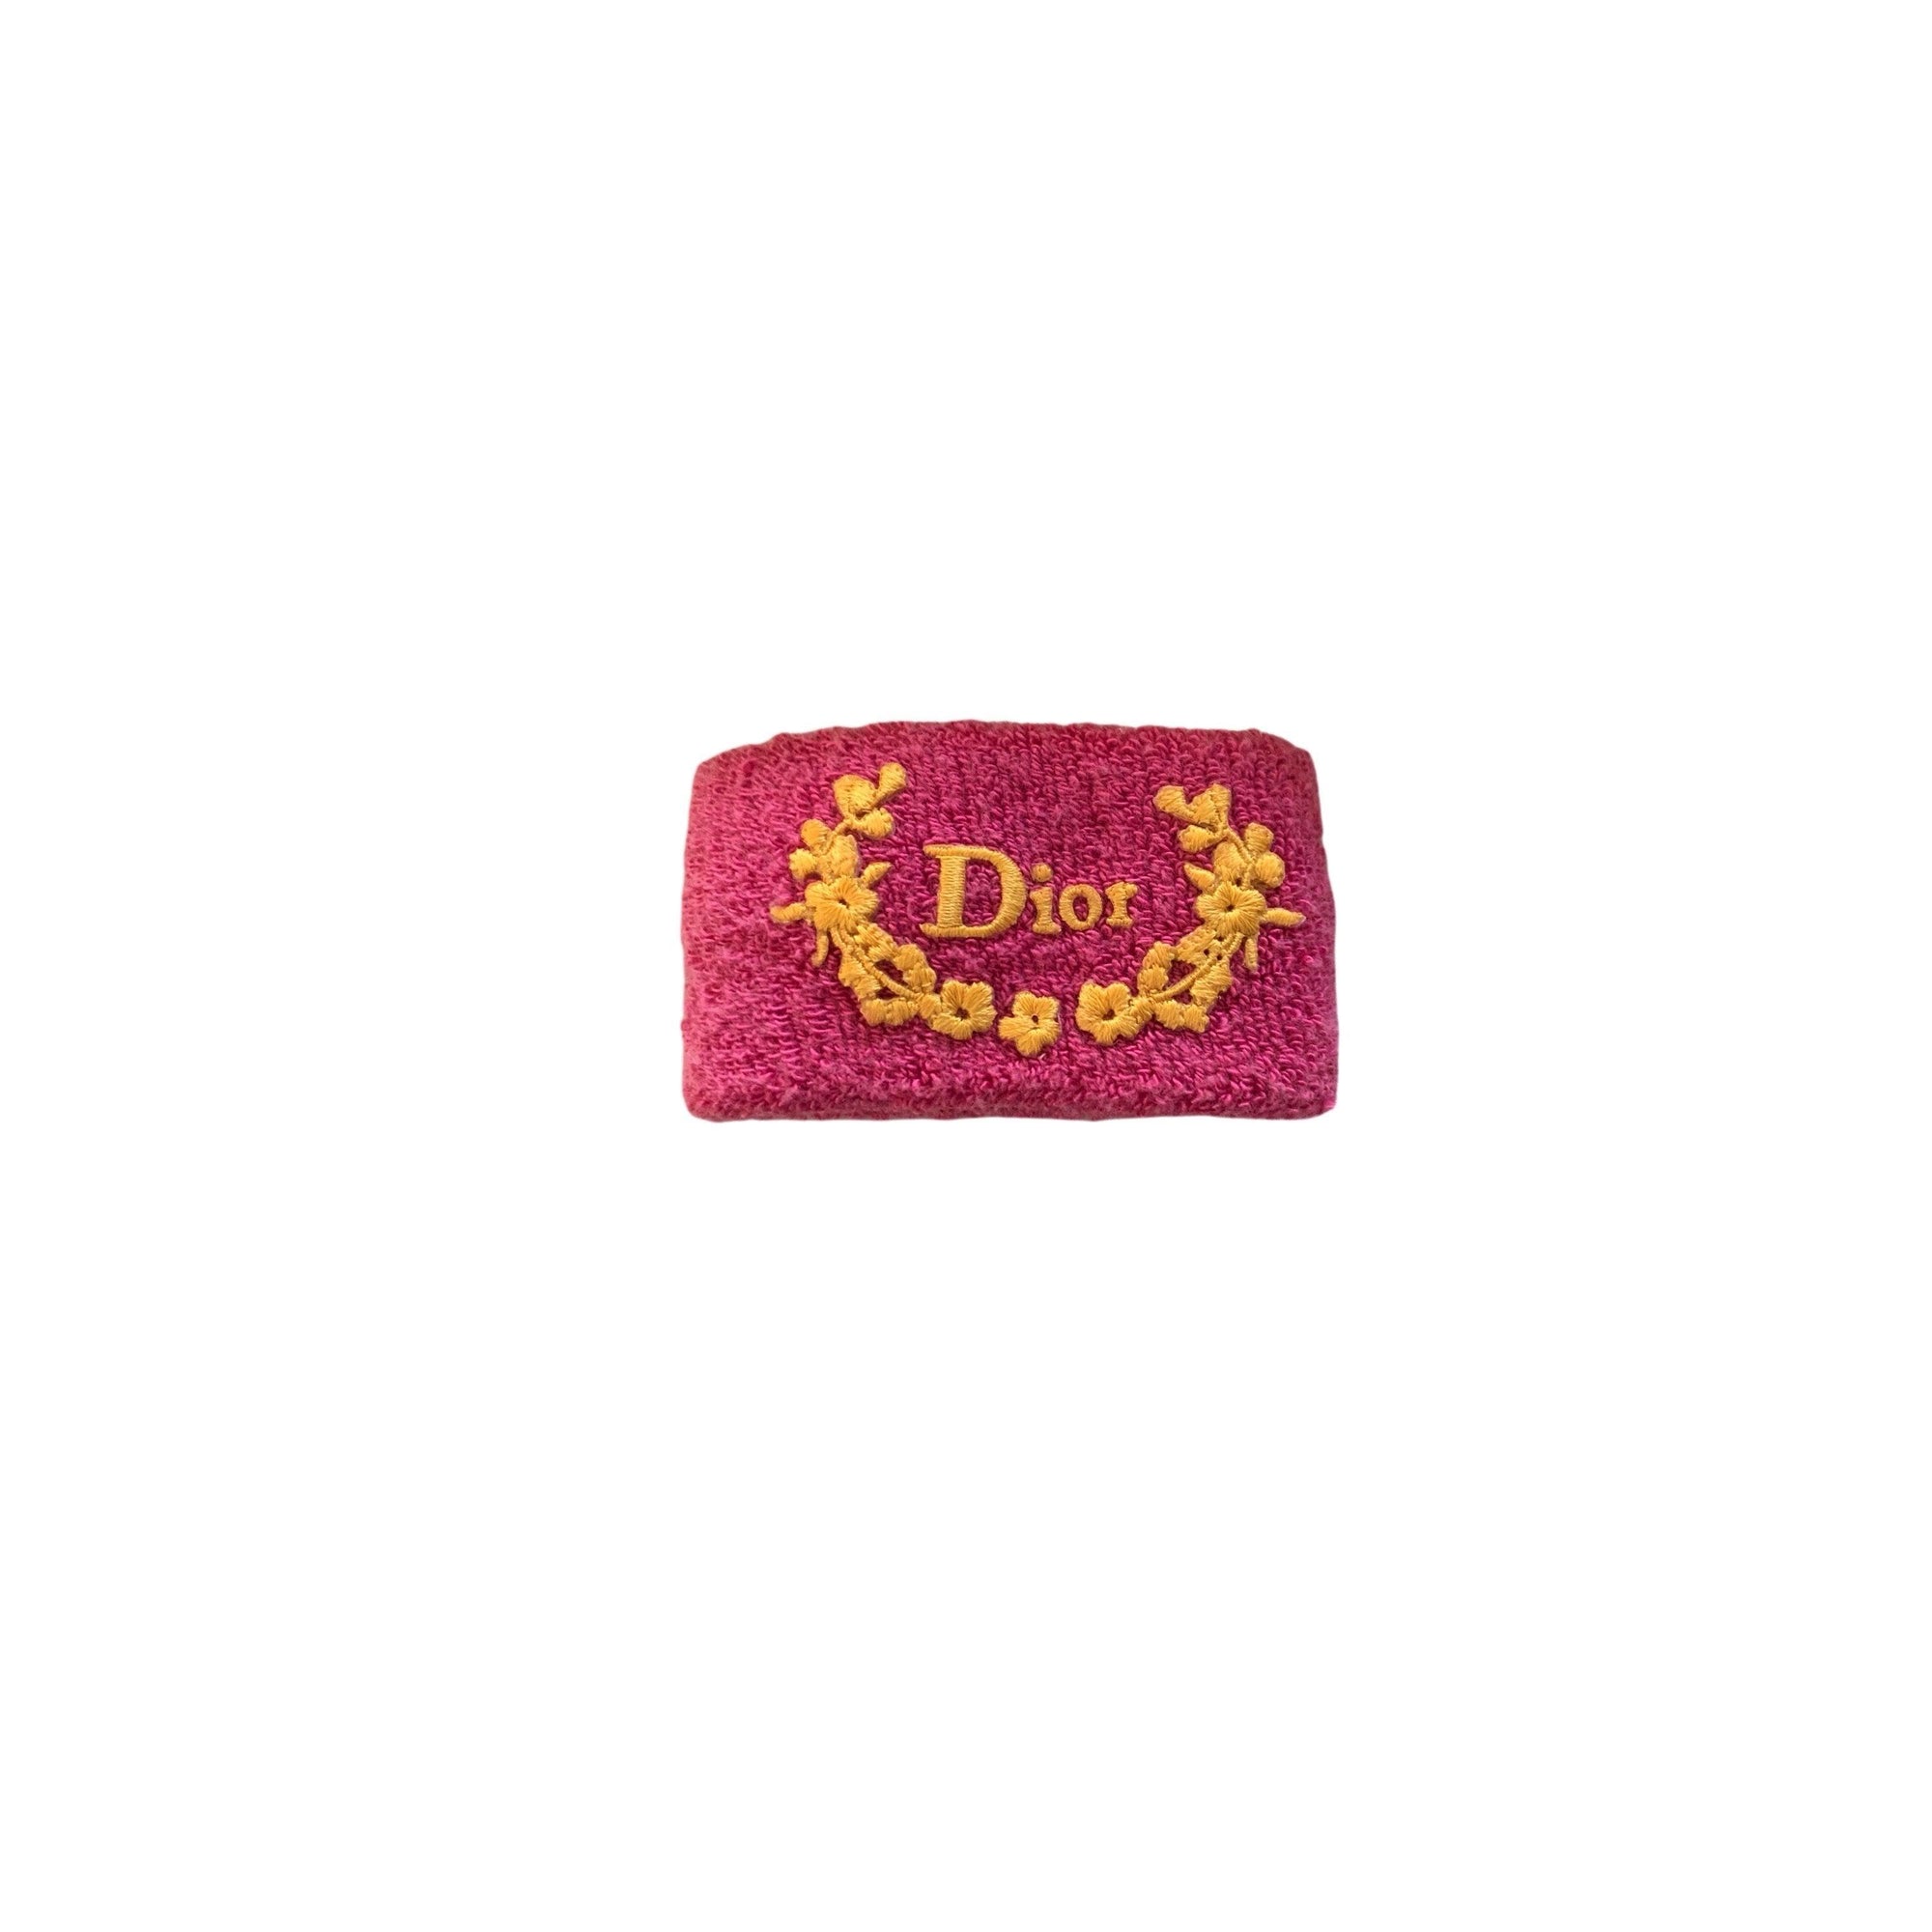 Dior Pink Terry Logo Sweatband - Accessories